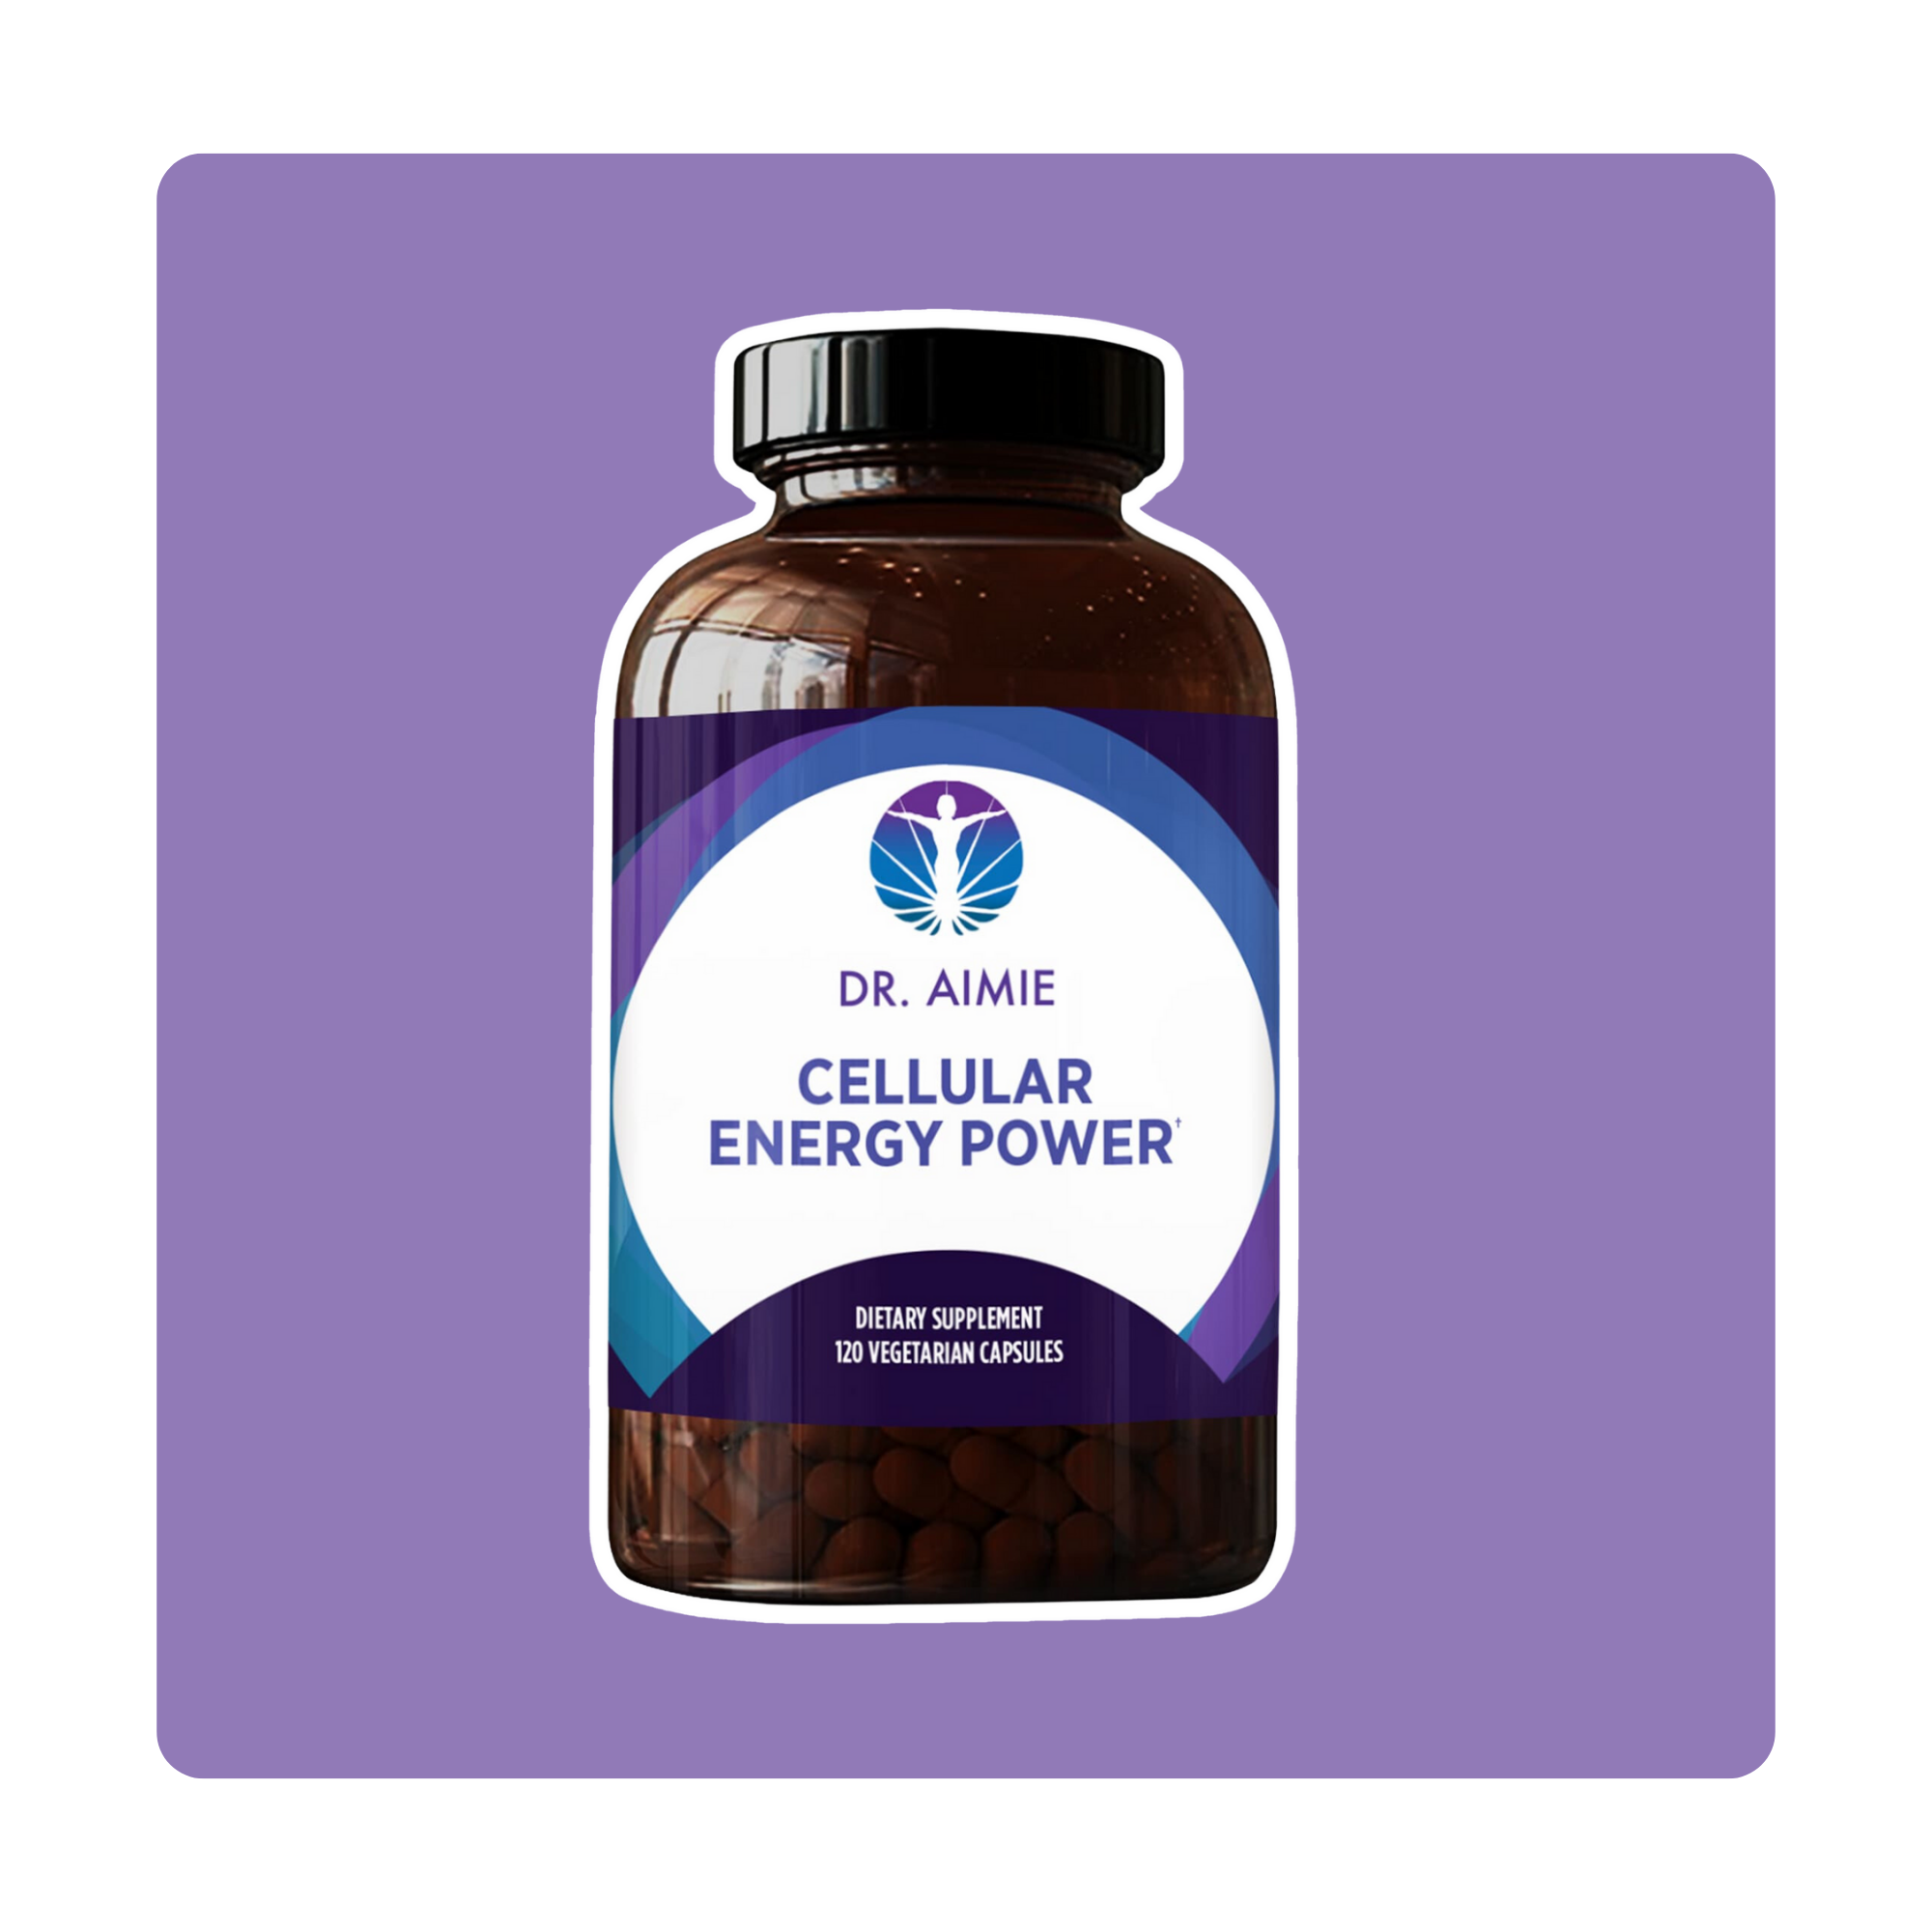 Cellular Energy Power - FAQ